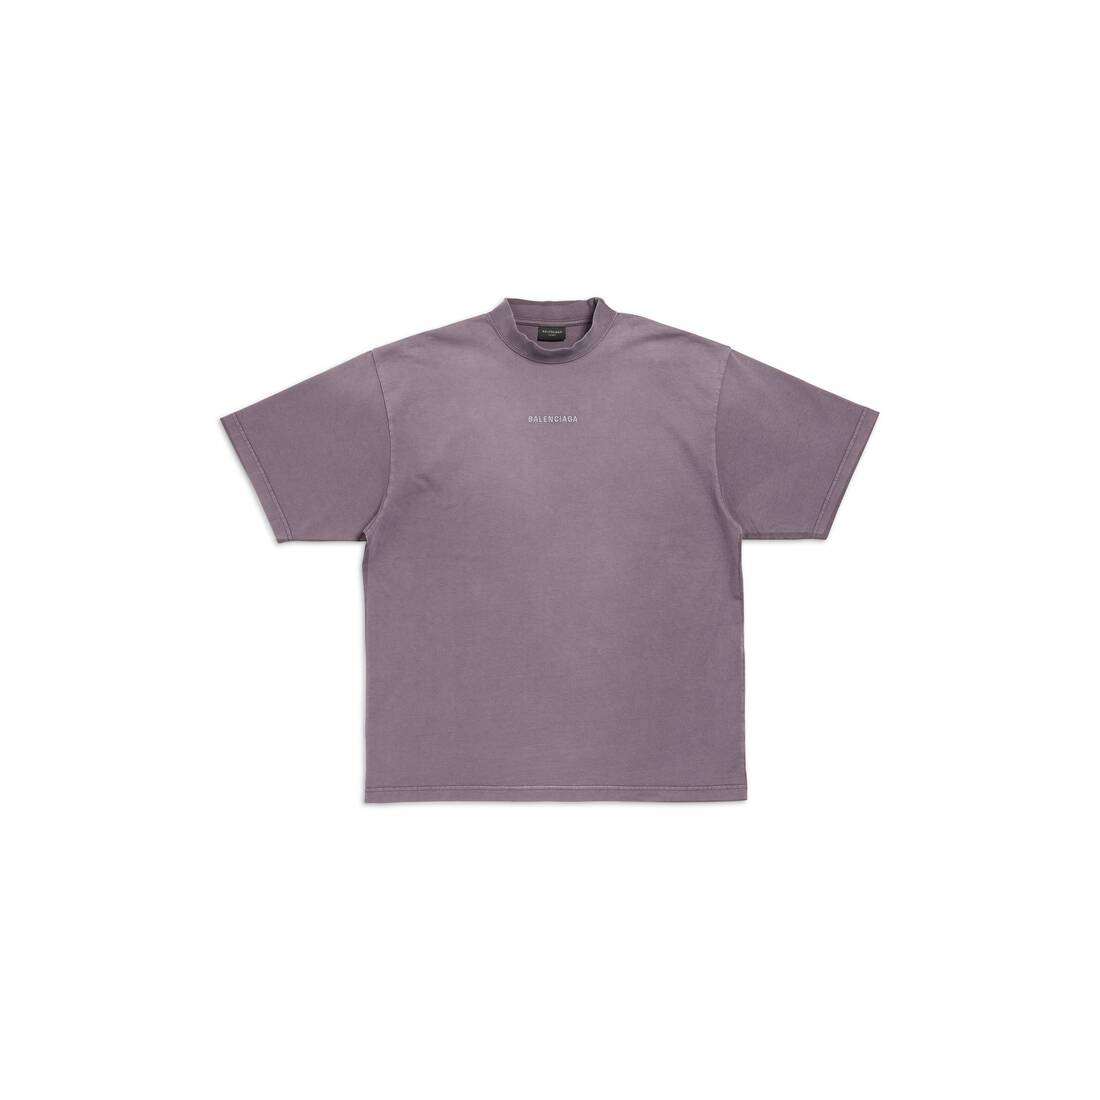 Balenciaga Back T-shirt Medium Fit in Purple/grey